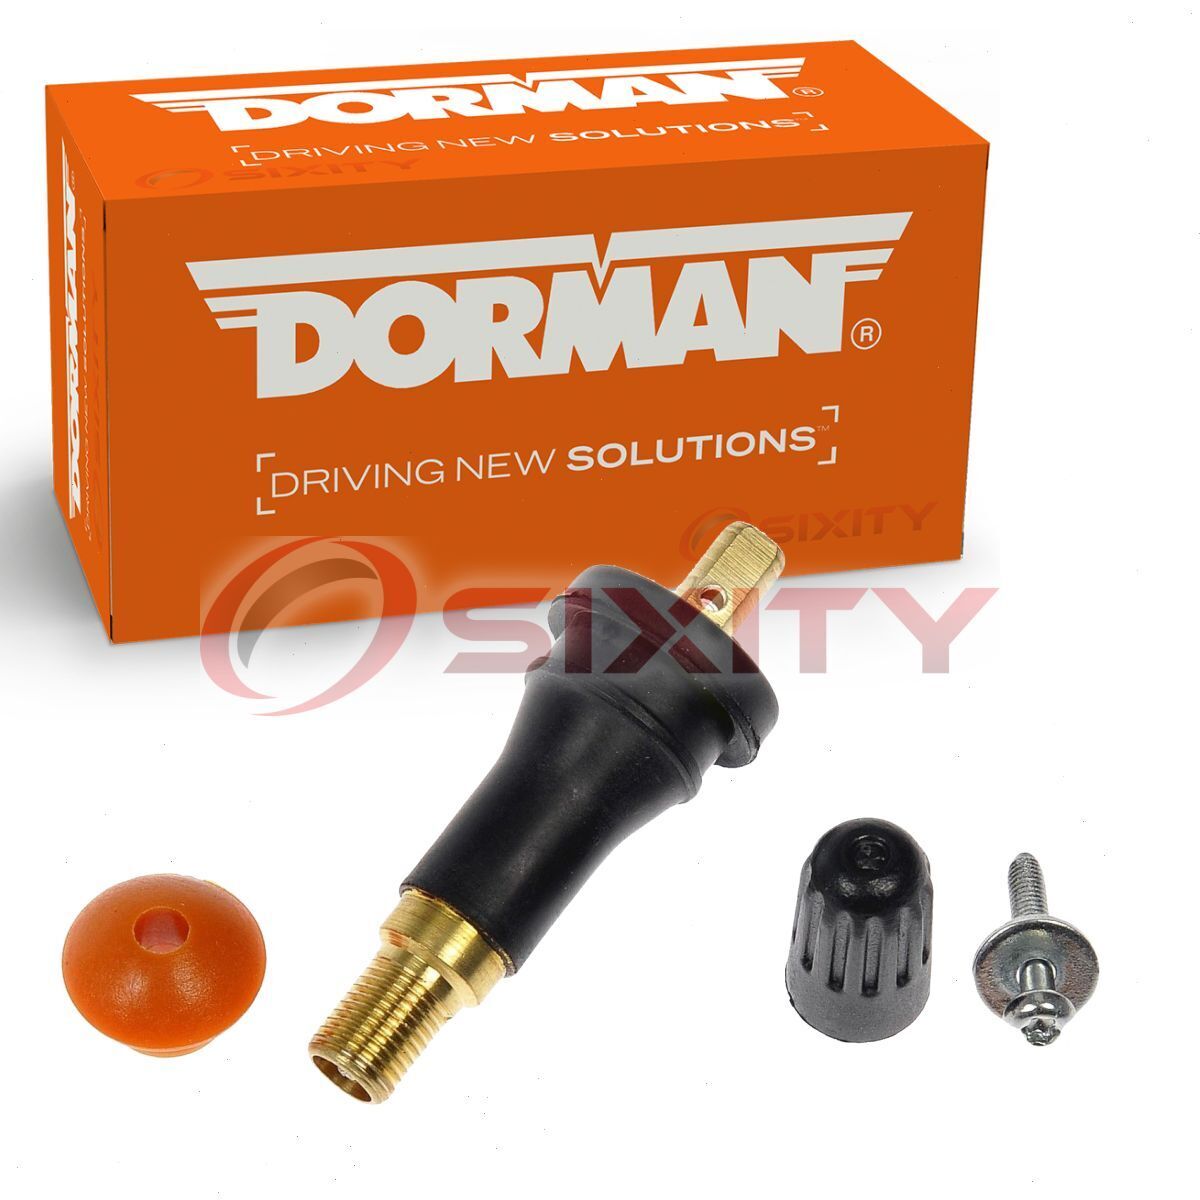 Dorman TPMS Valve Kit for 2008 BMW 535xi Tire Pressure Monitoring System  ne